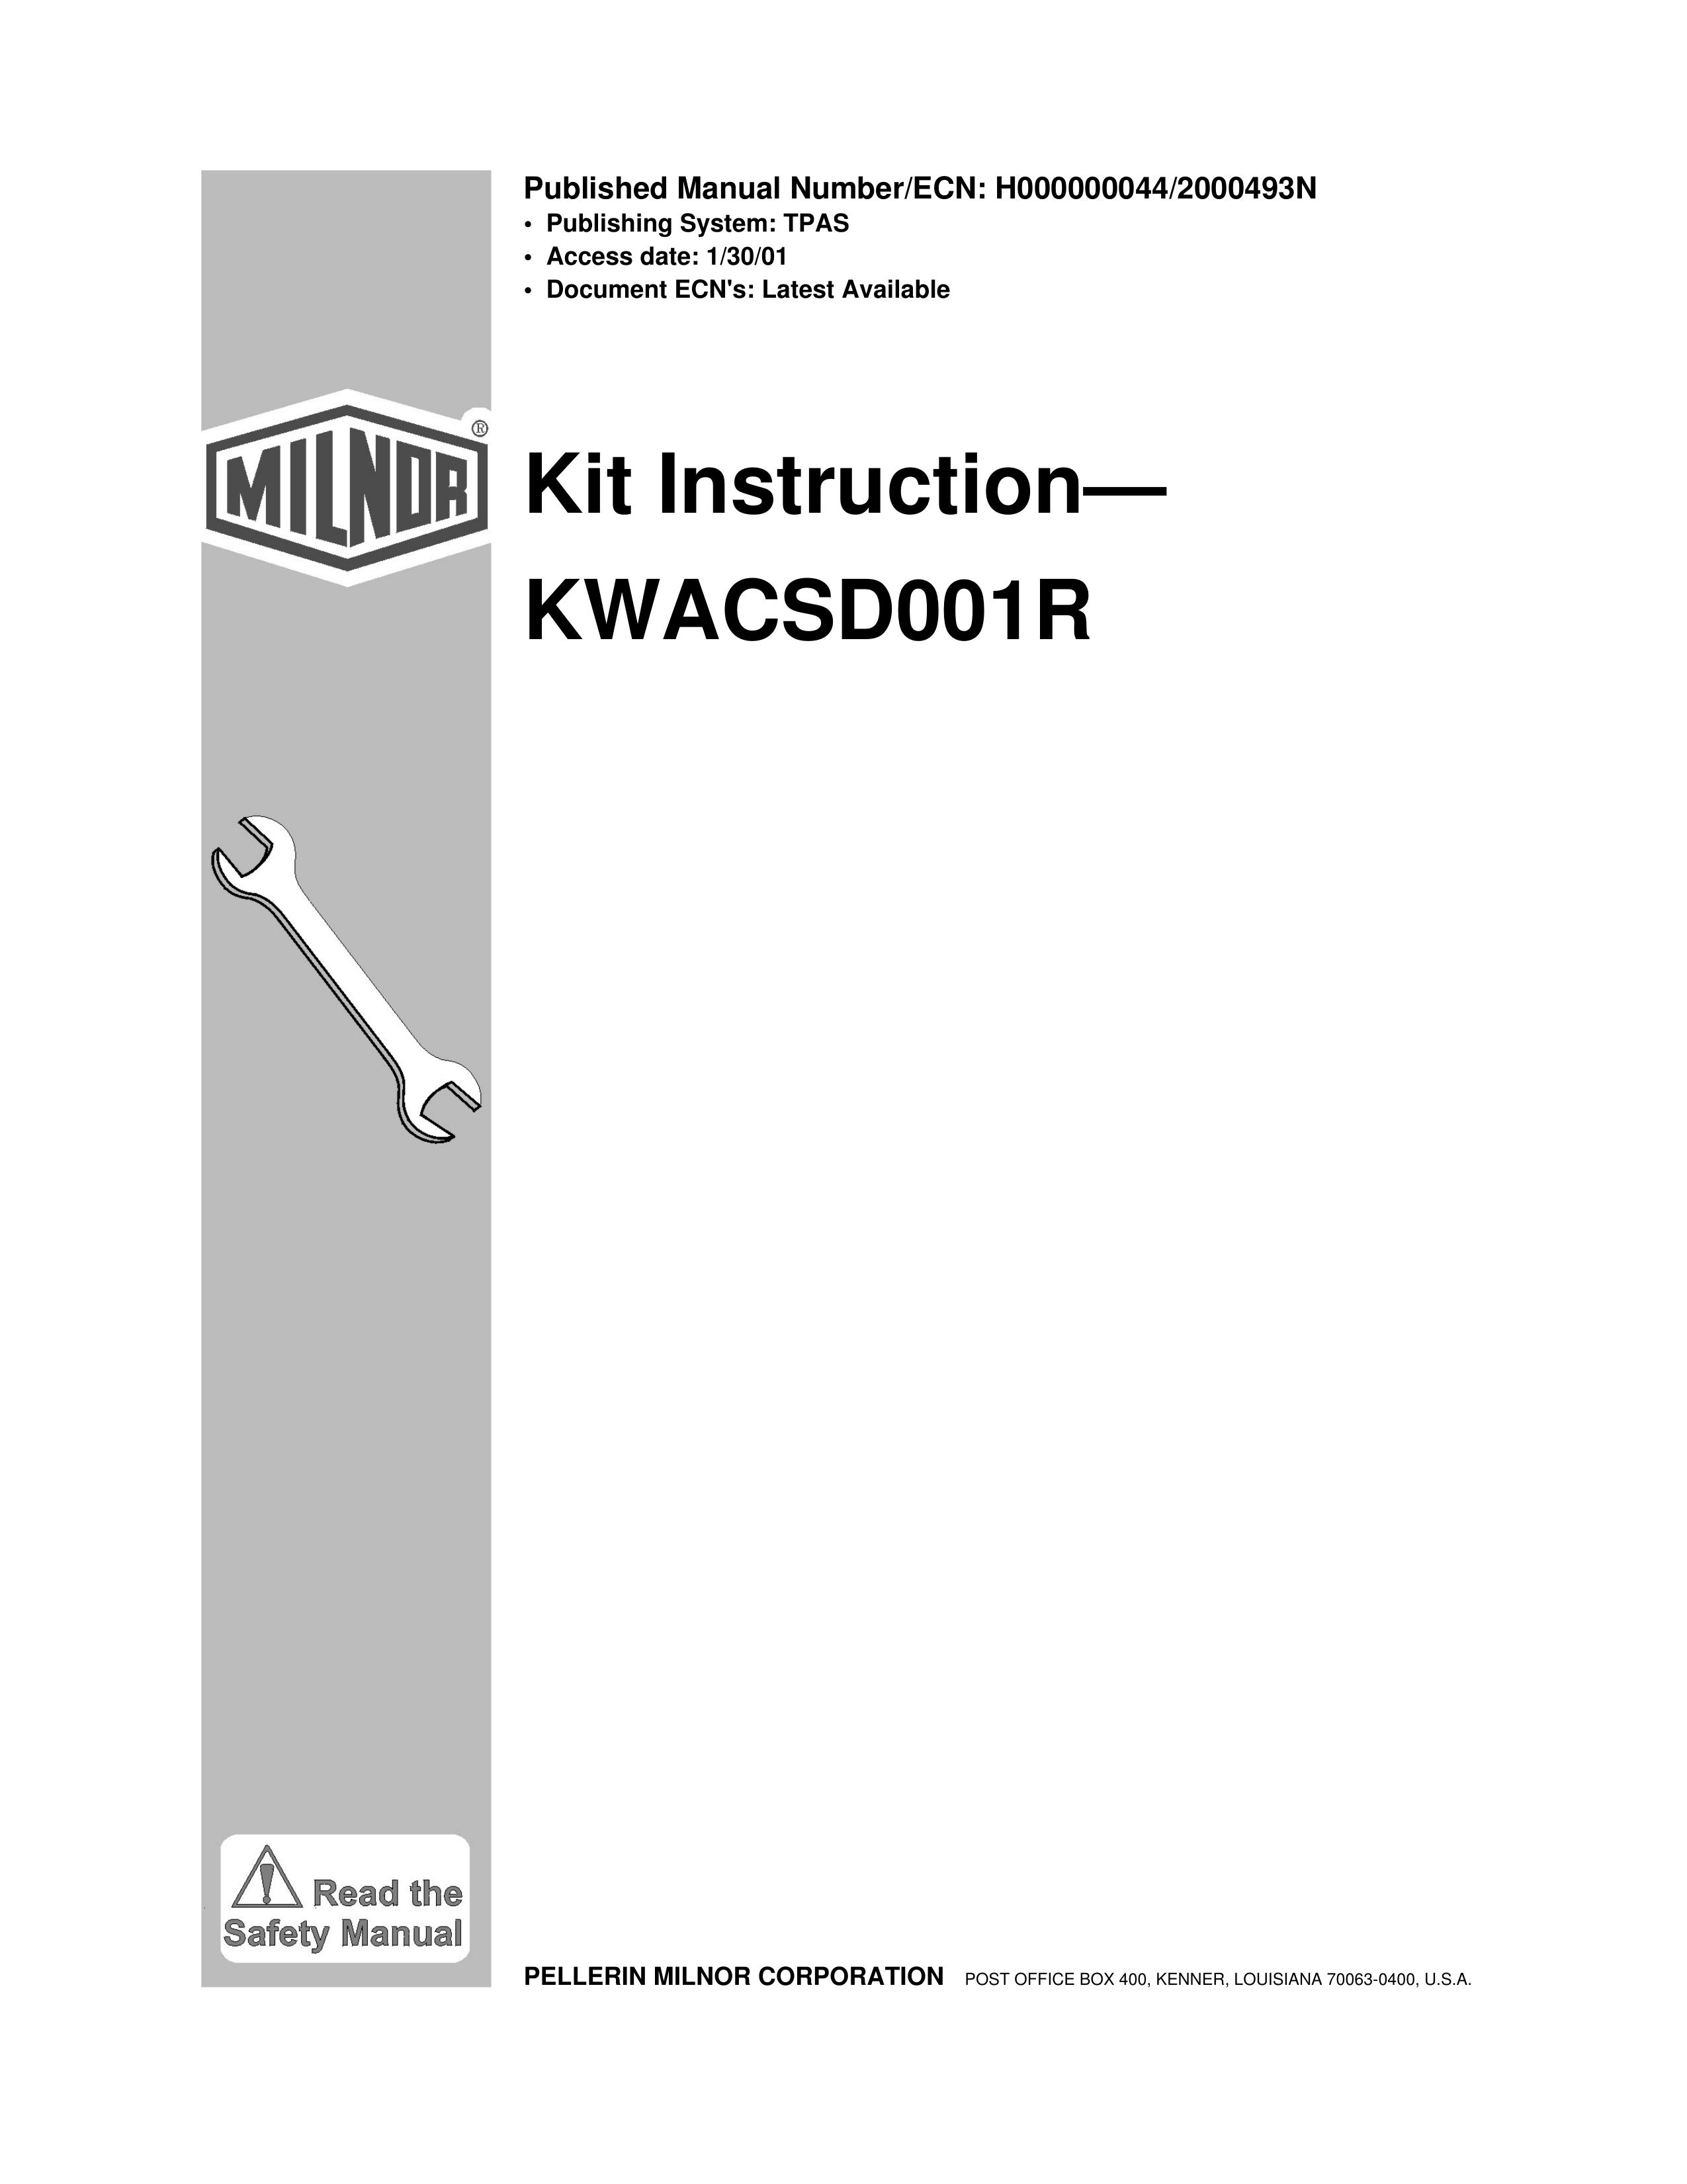 Milnor KWACSD001R Sprinkler User Manual